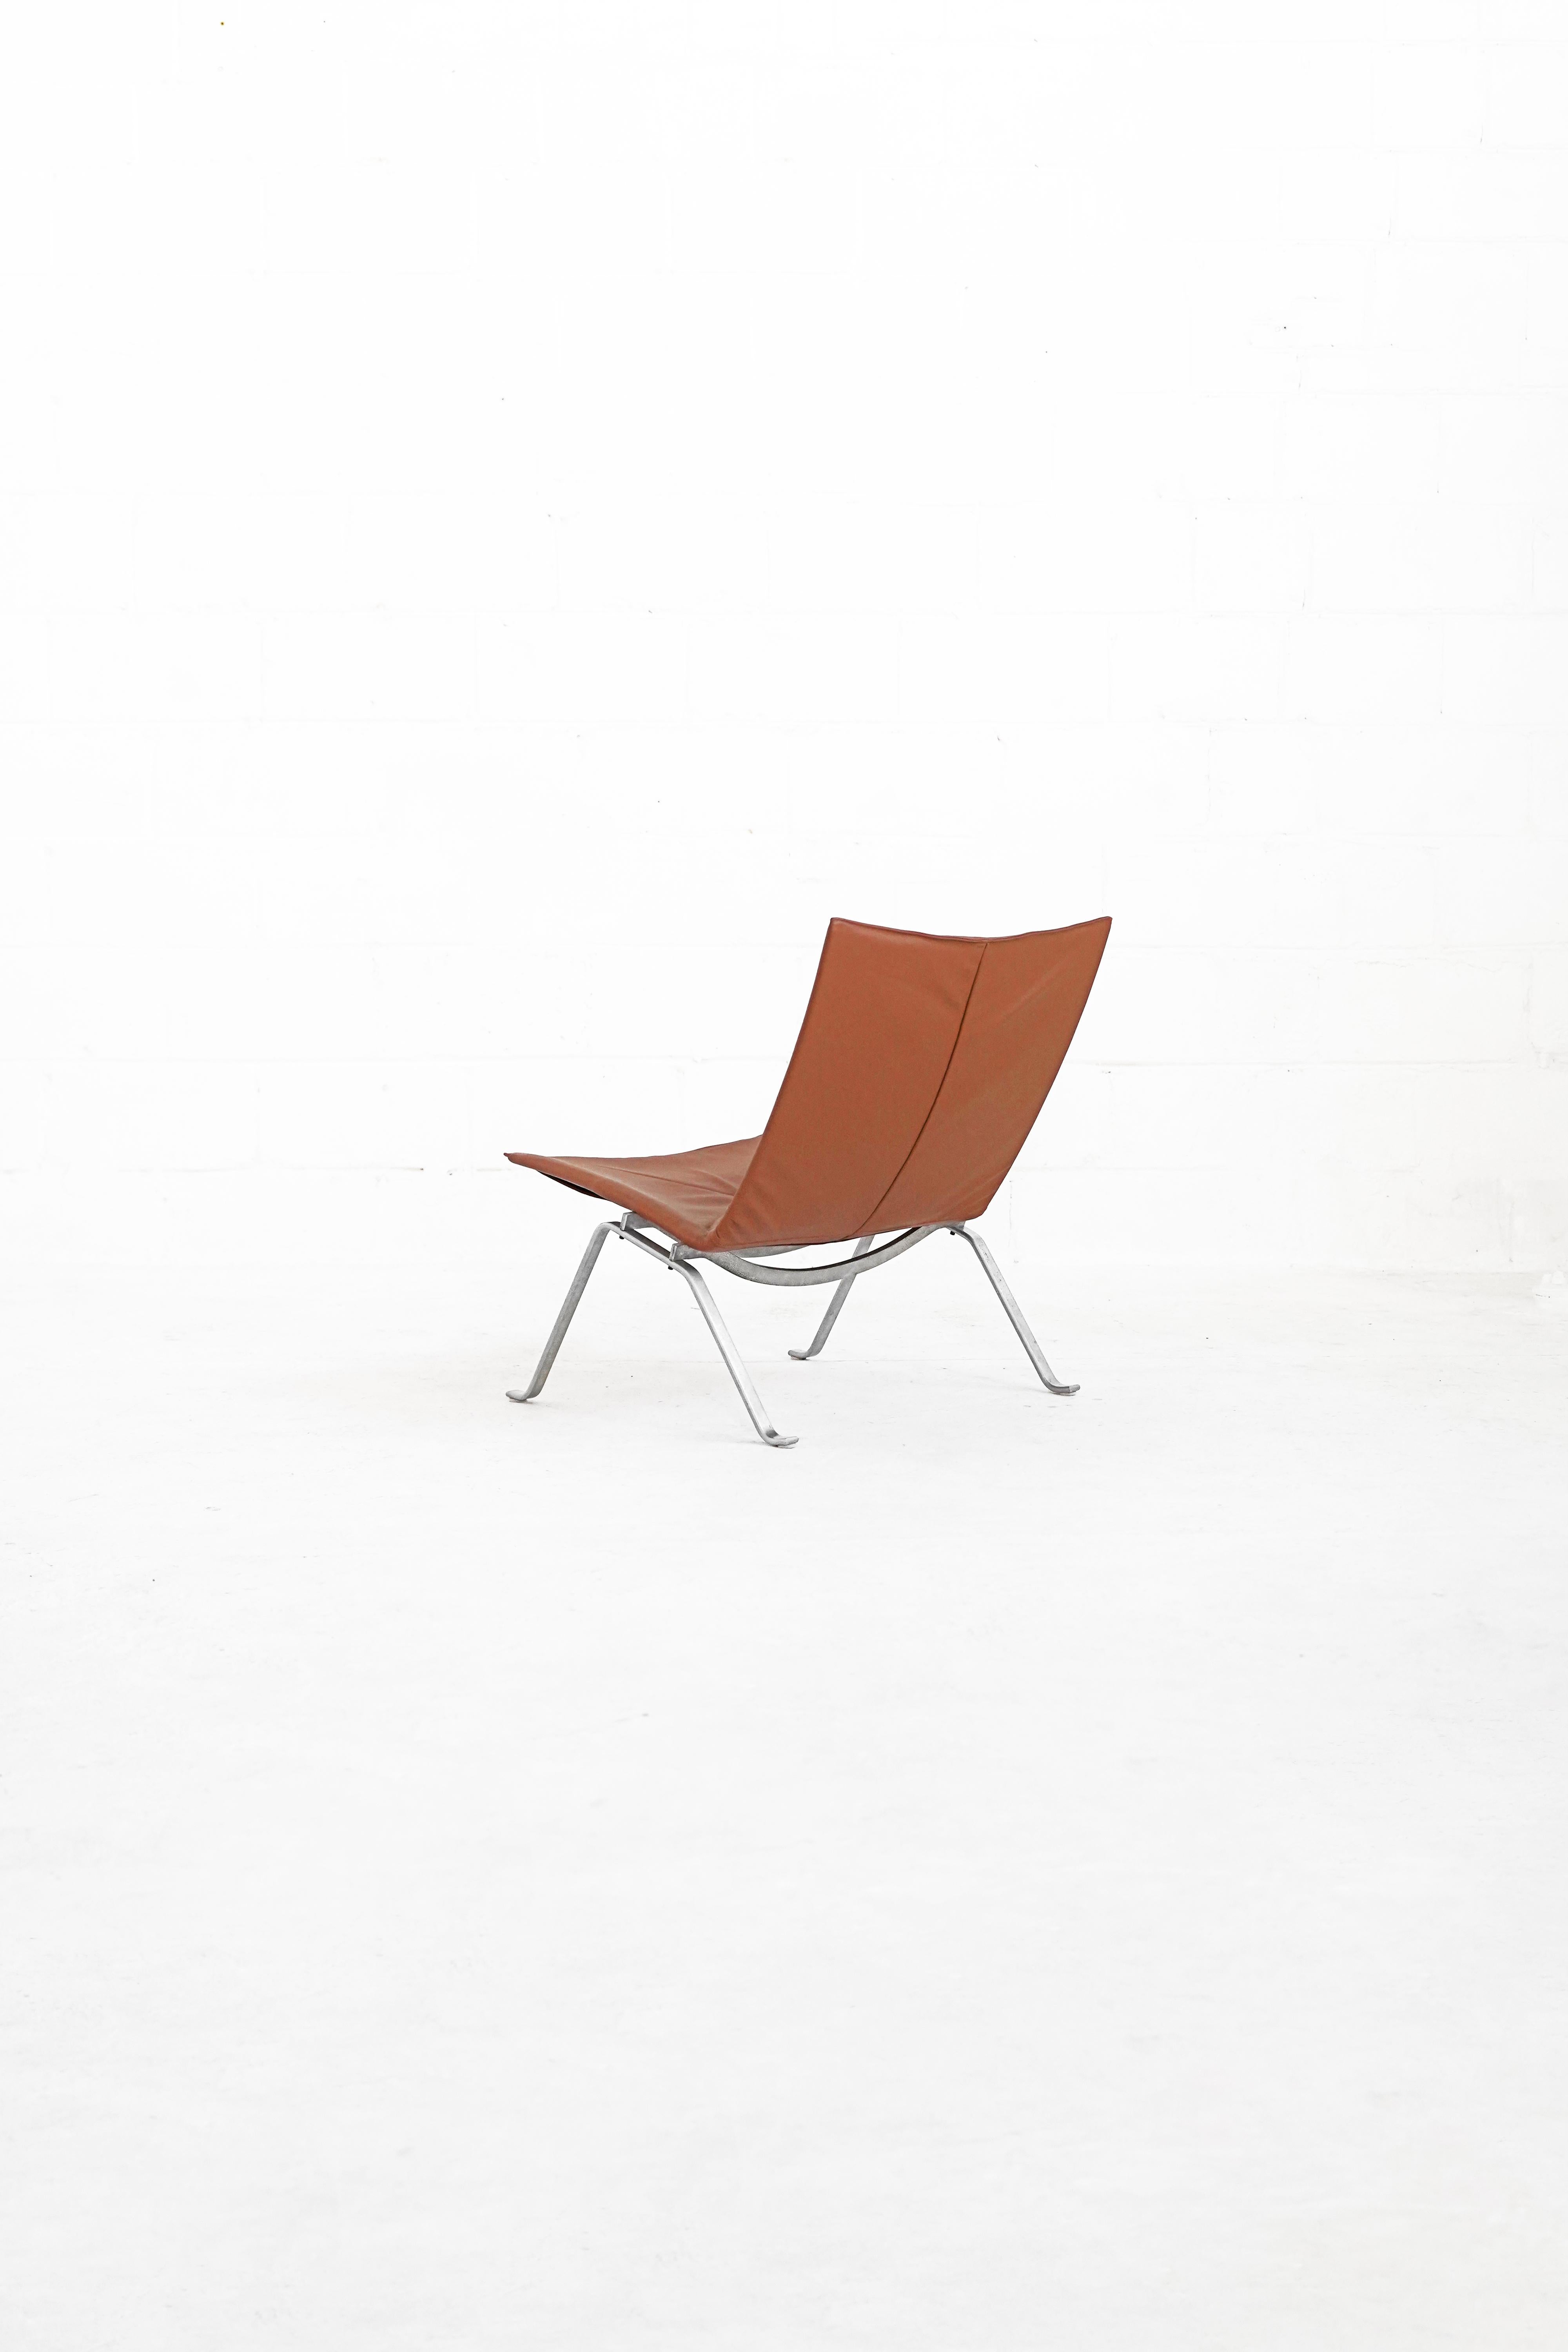 Mid-20th Century Danish PK22 Lounge Chair by Poul Kjærholm for E. Kold Christiensen